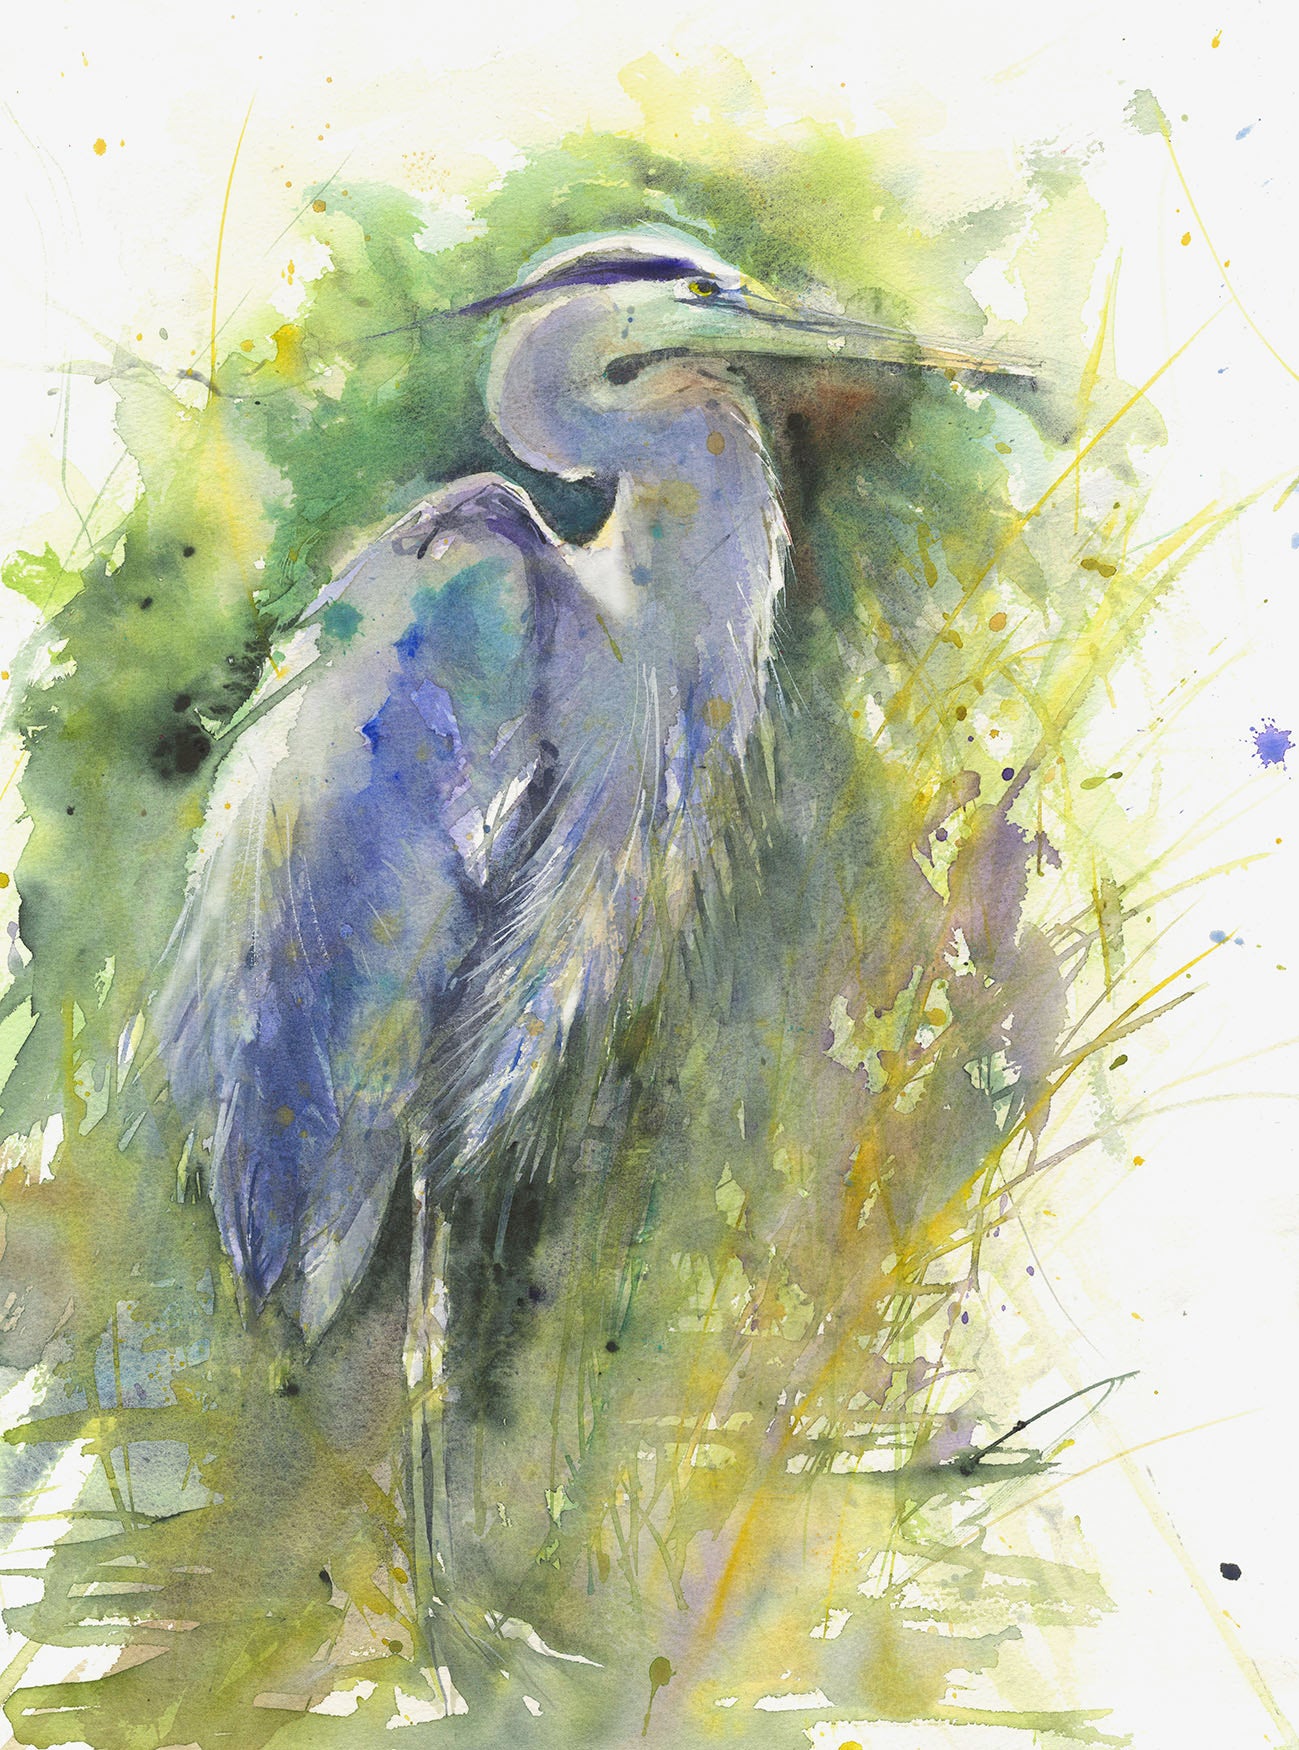 Original watercolour painting "Blue heron"